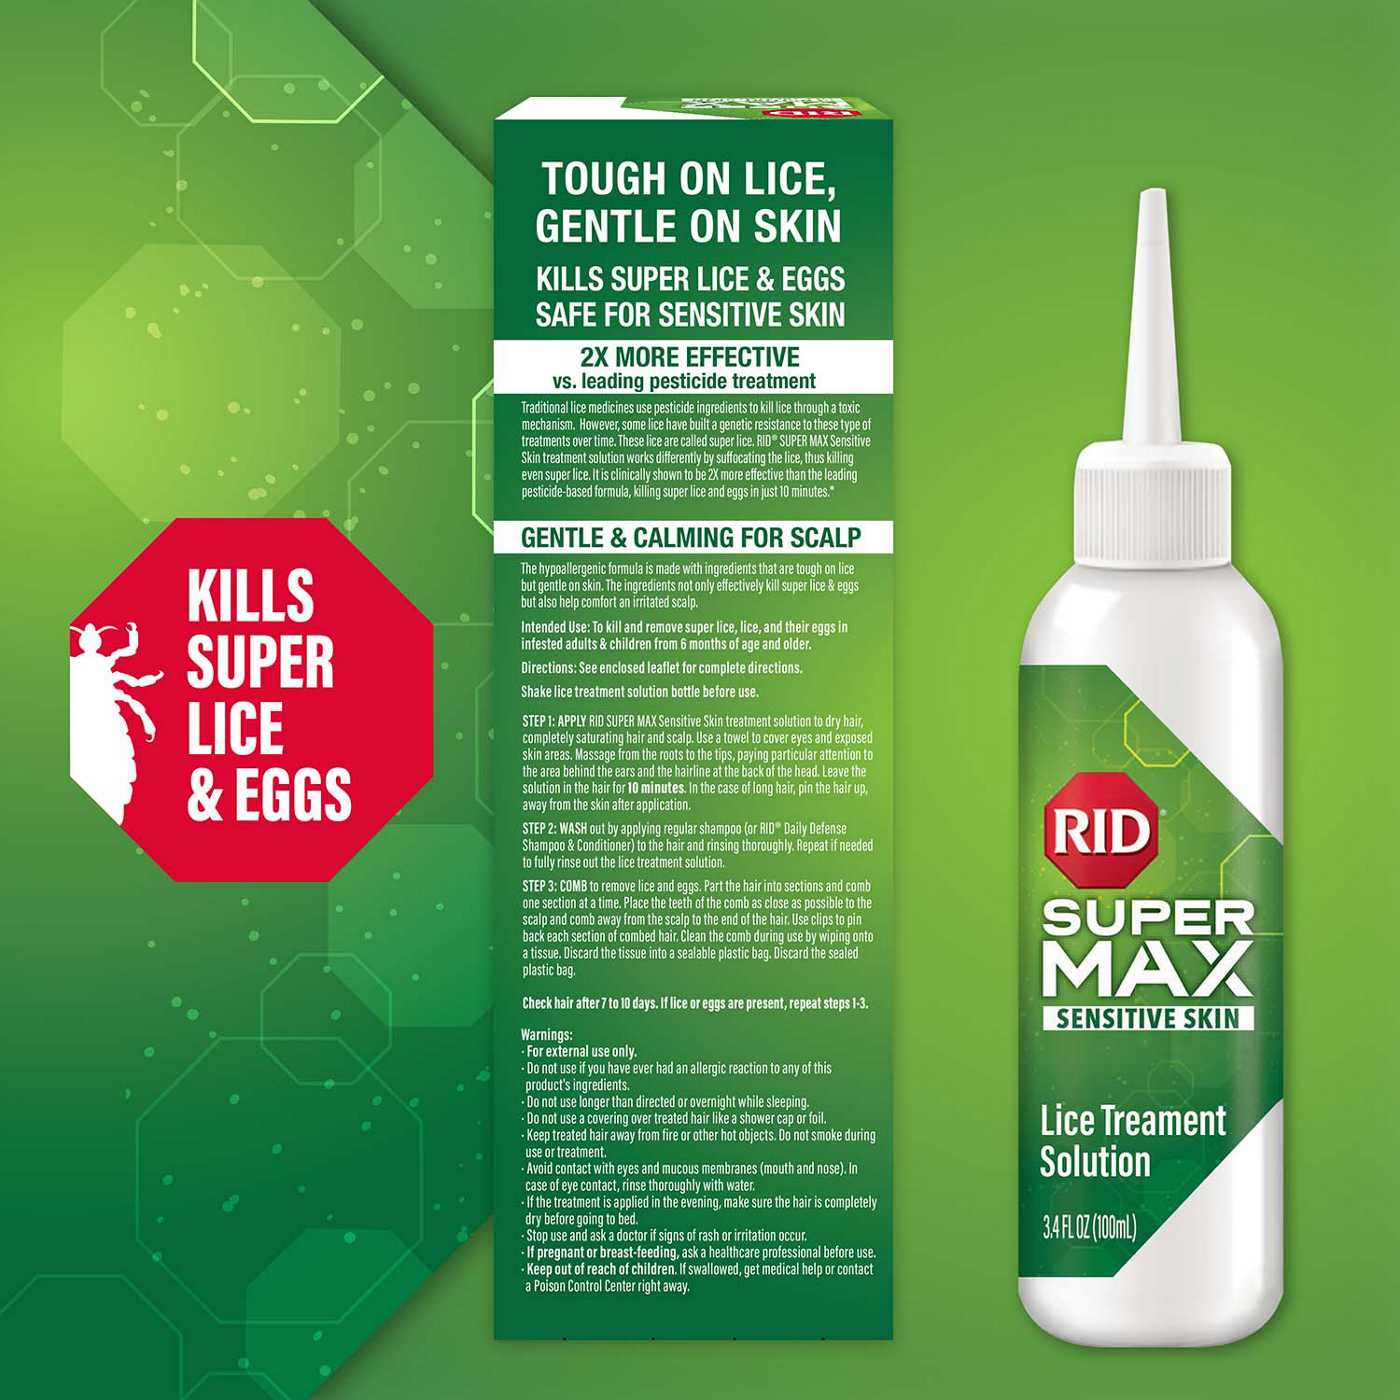 RID Super Max Sensitive Skin Lice Elimination Treatment; image 3 of 6